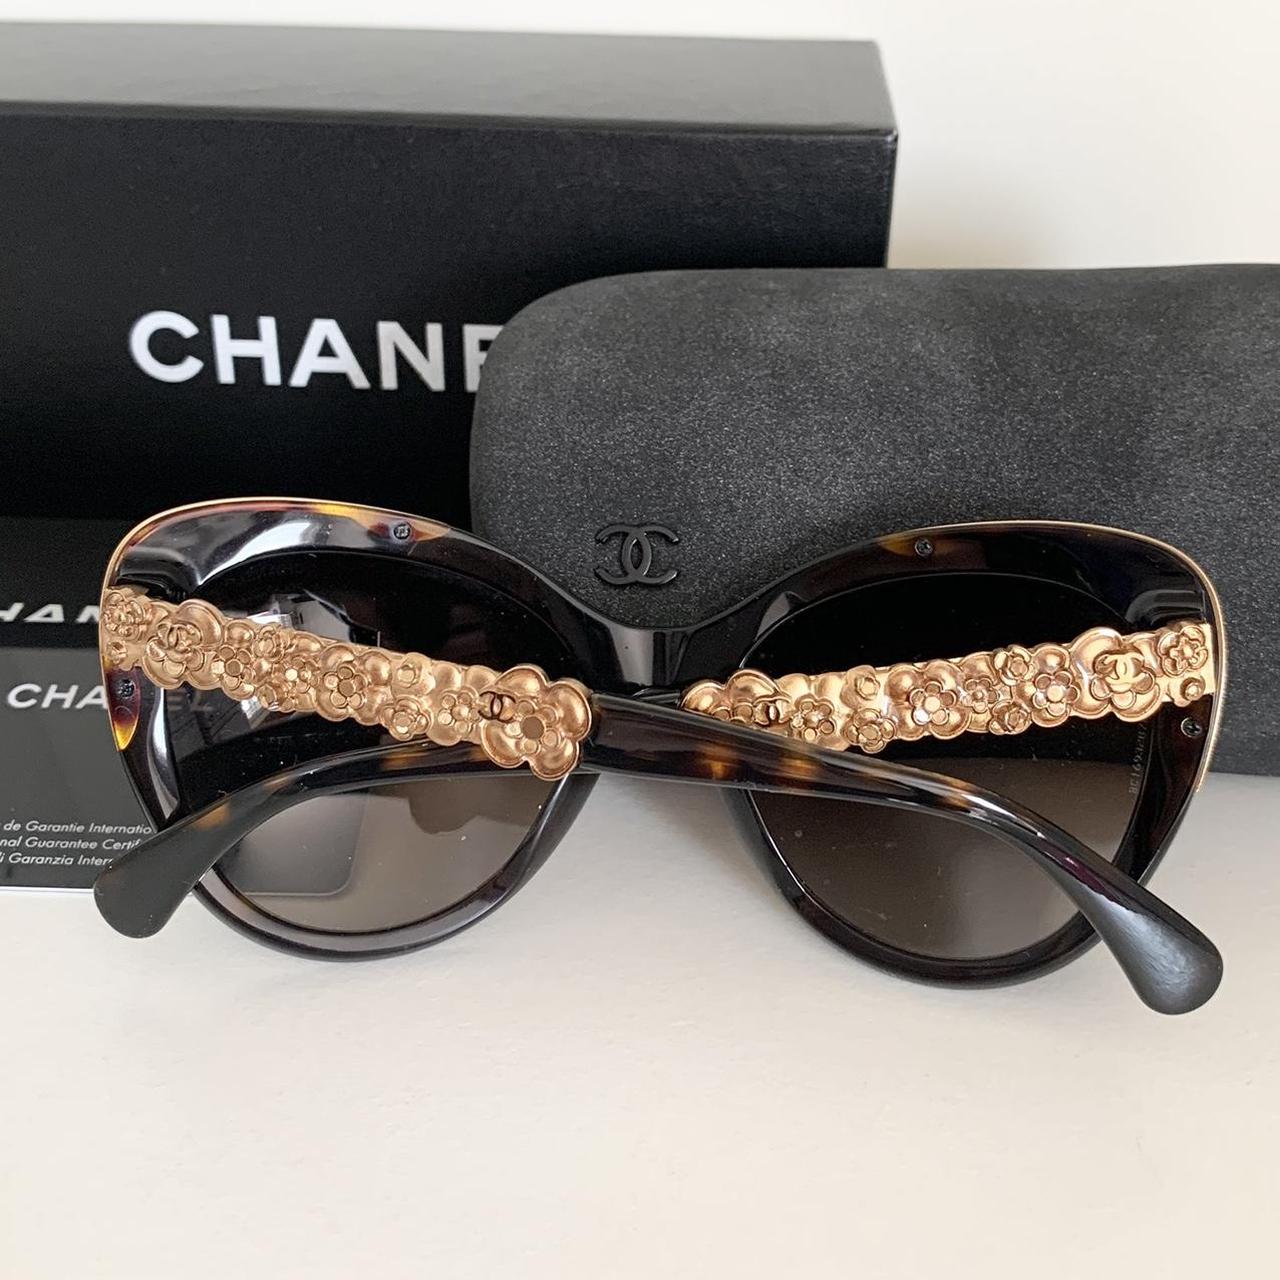 Chanel special sunglasses. Cat eye shape. Scalloped - Depop